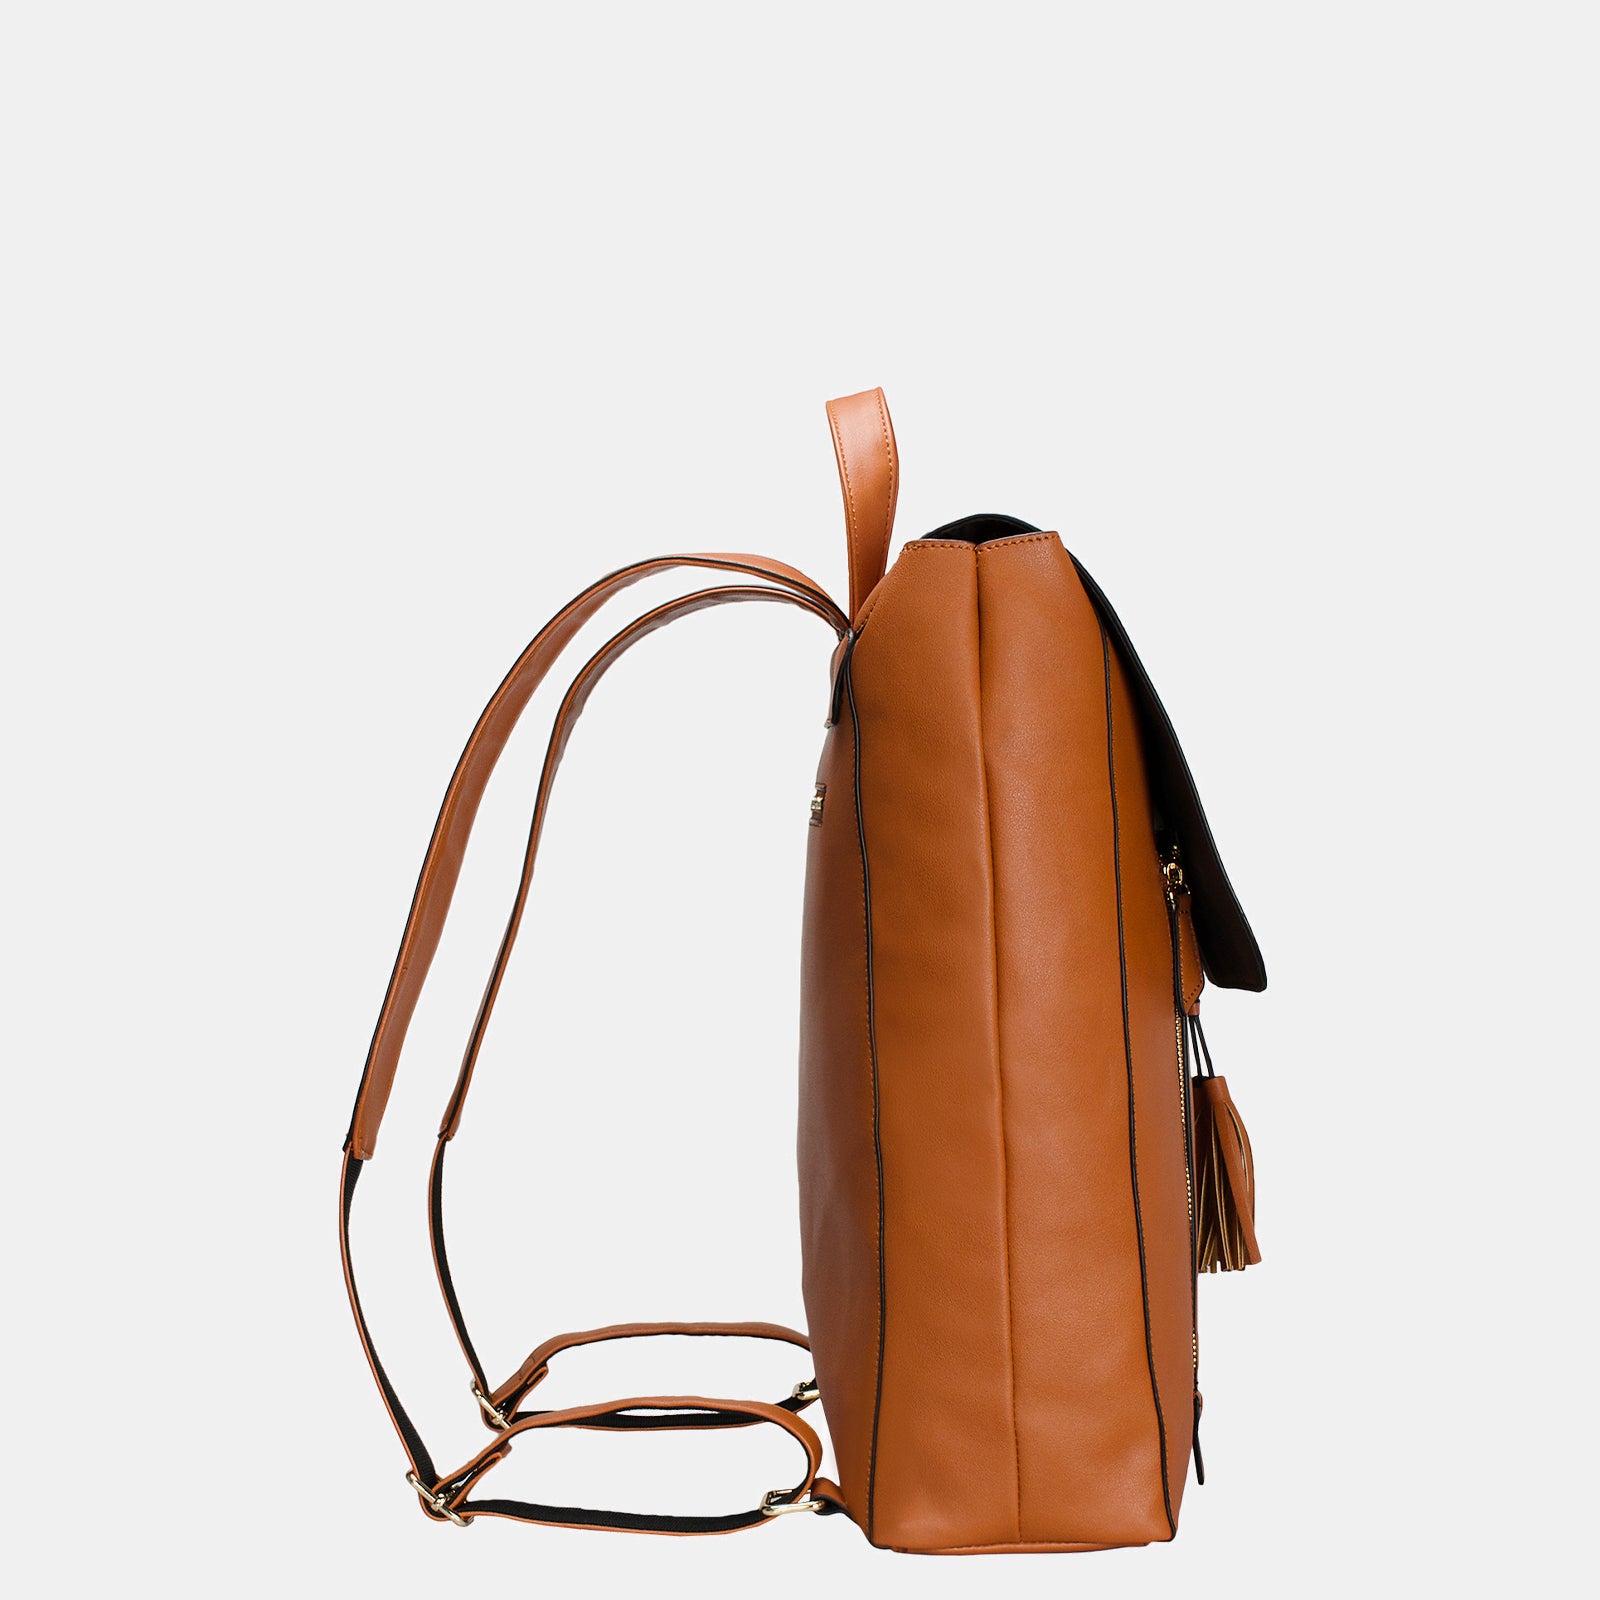 Estarer Women Leather 15.6 Inch Laptop Backpack College Bag Brown